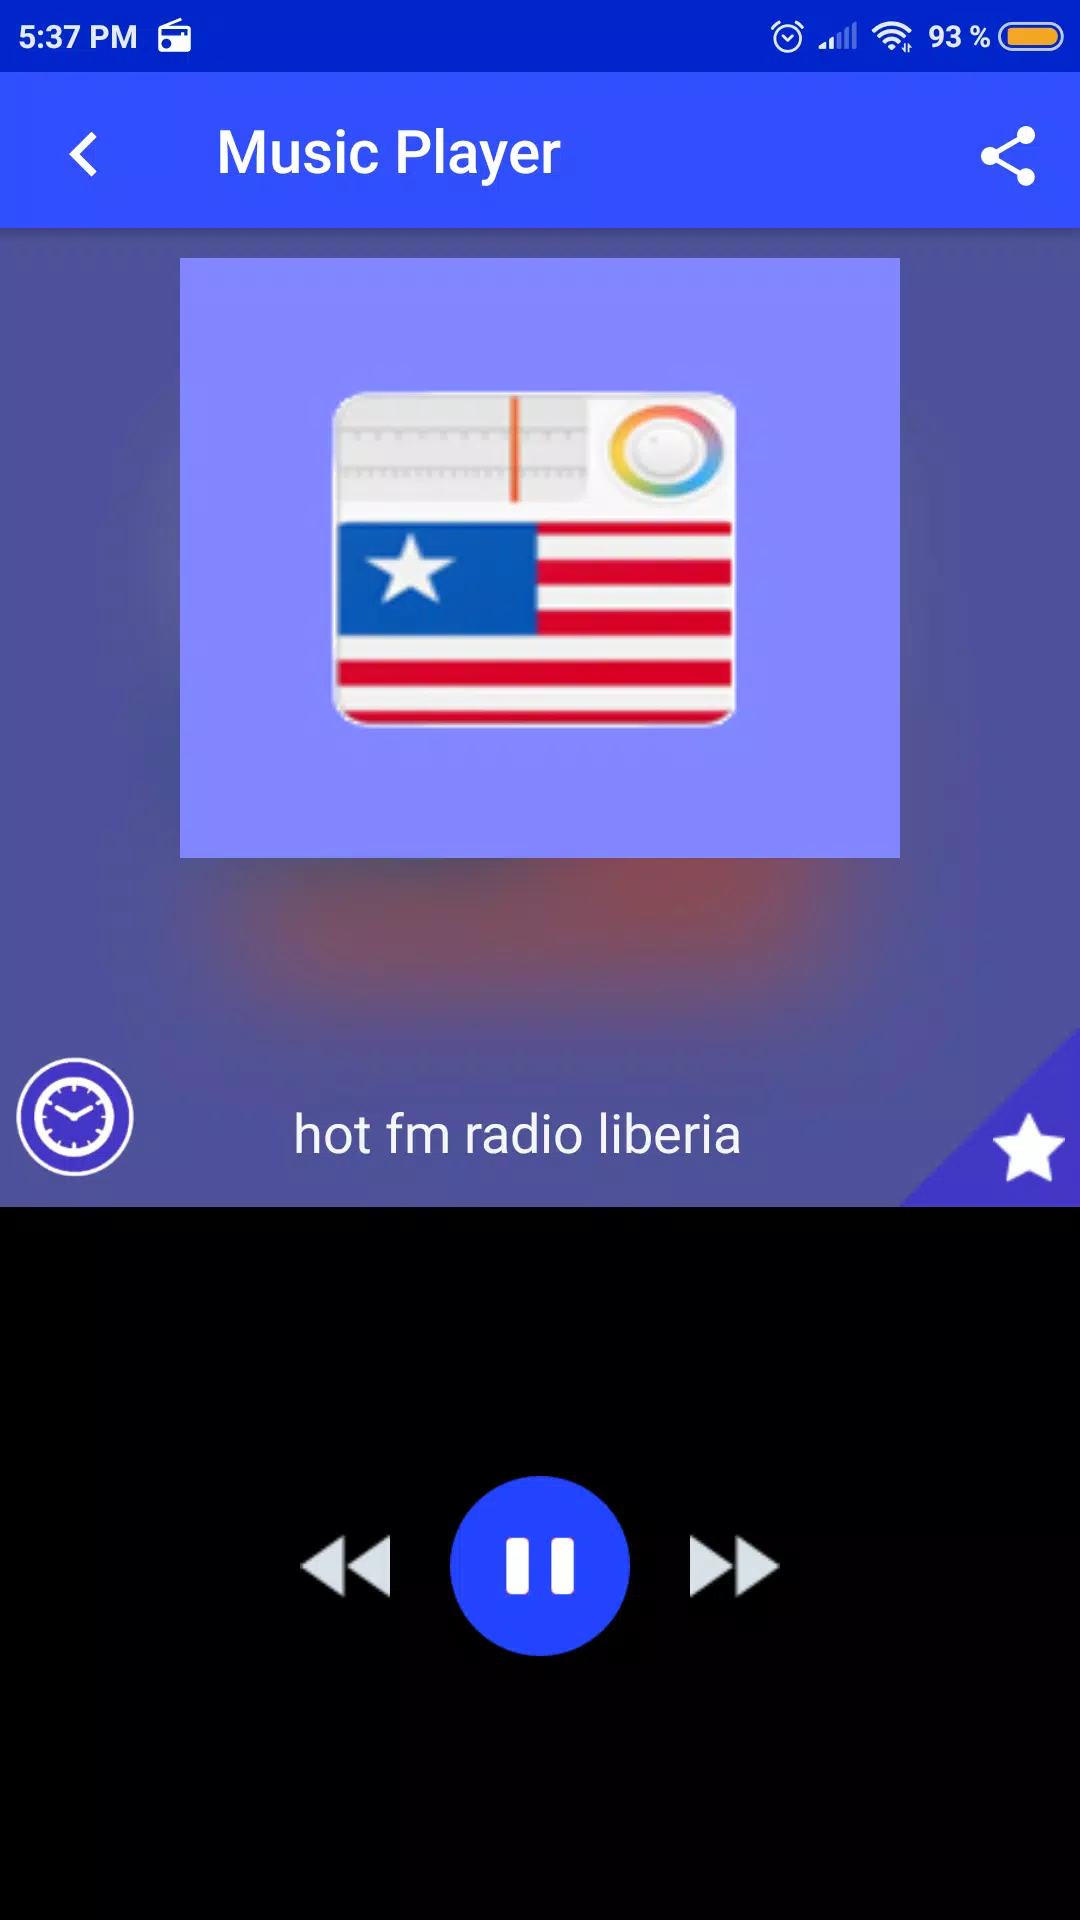 Hot FM radio liberia App fm free listen Online APK for Android Download